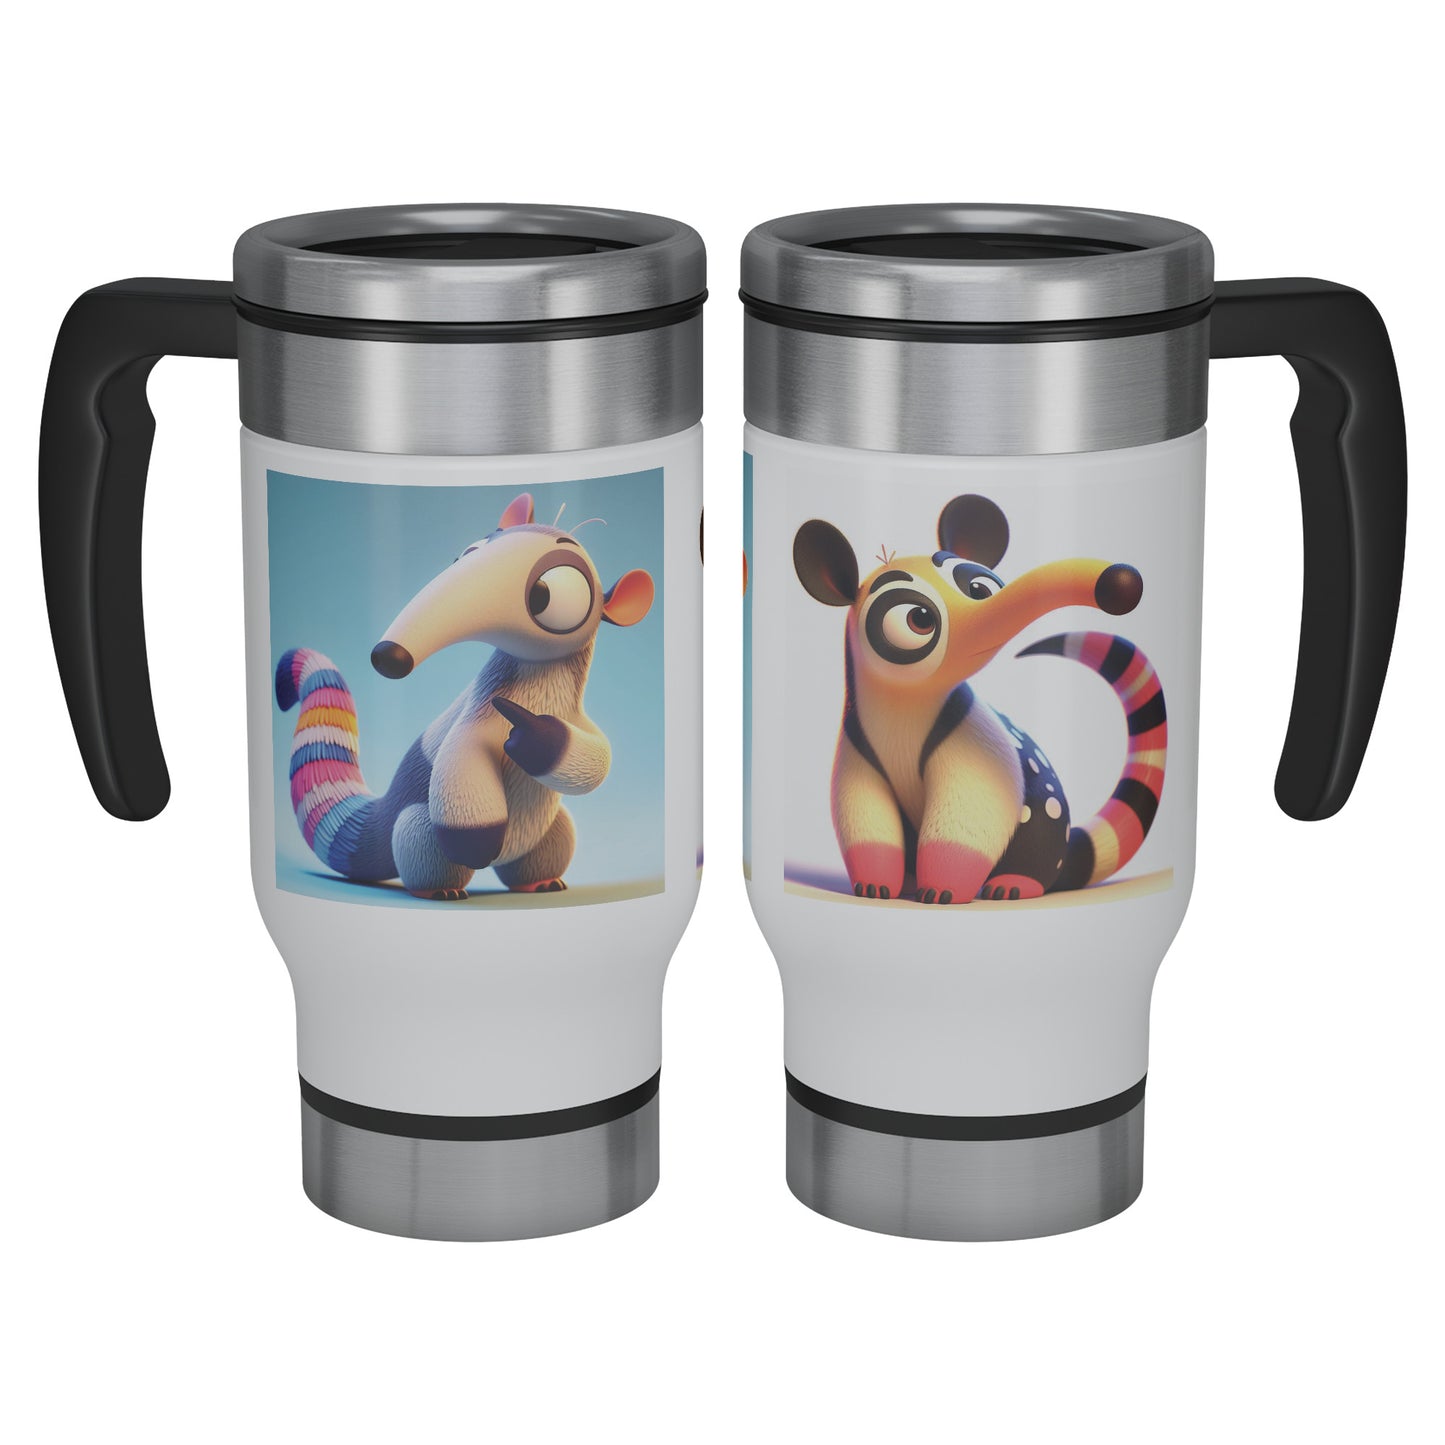 Cute & Adorable Animals - 14oz Travel Mug - Anteaters #2